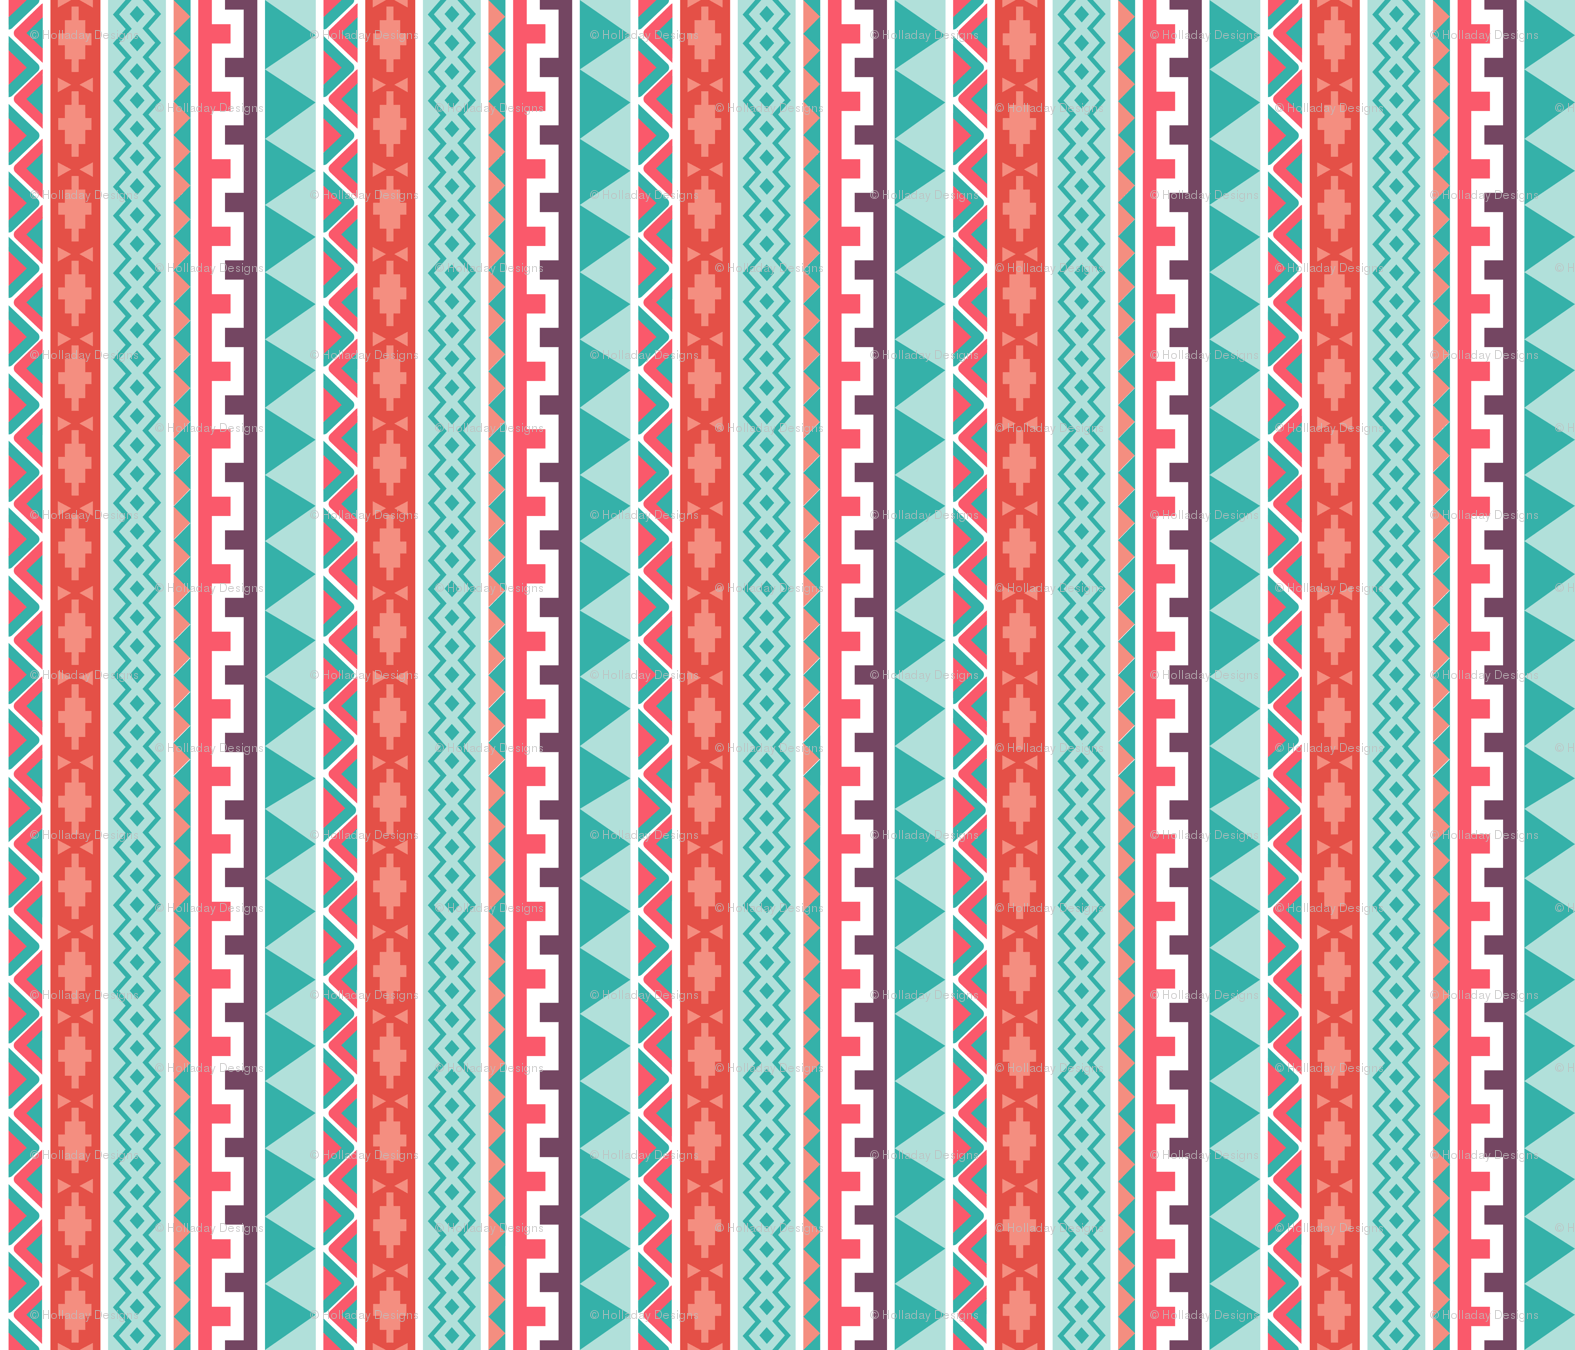 soft tribal pattern wallpaper